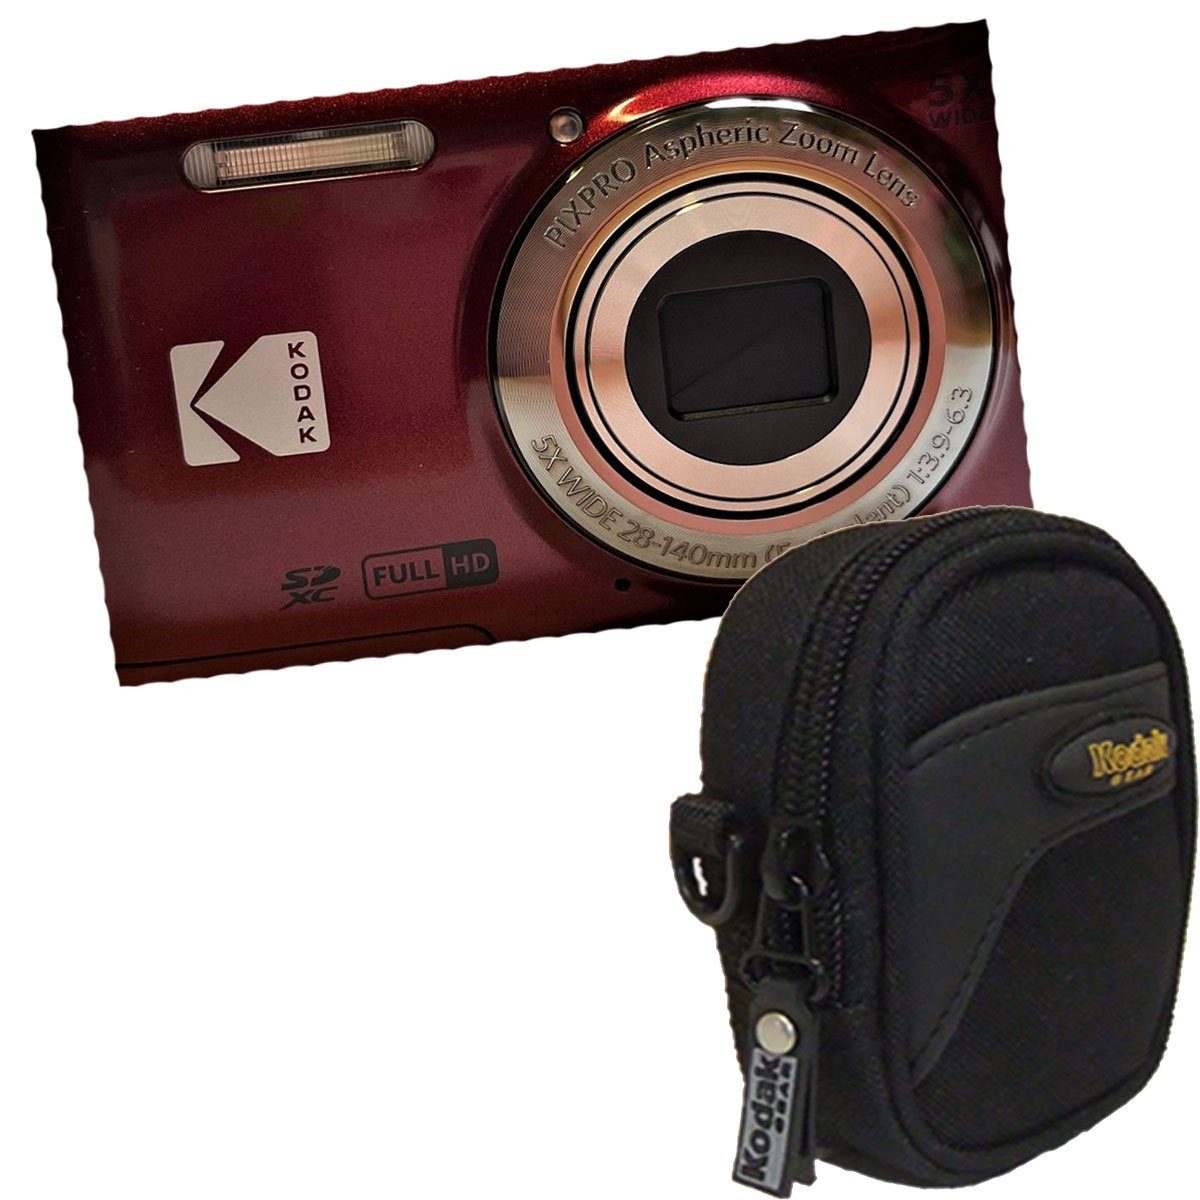 Gear Kodak Kodak Kompaktkamera Tasche Kodak + rot FZ55